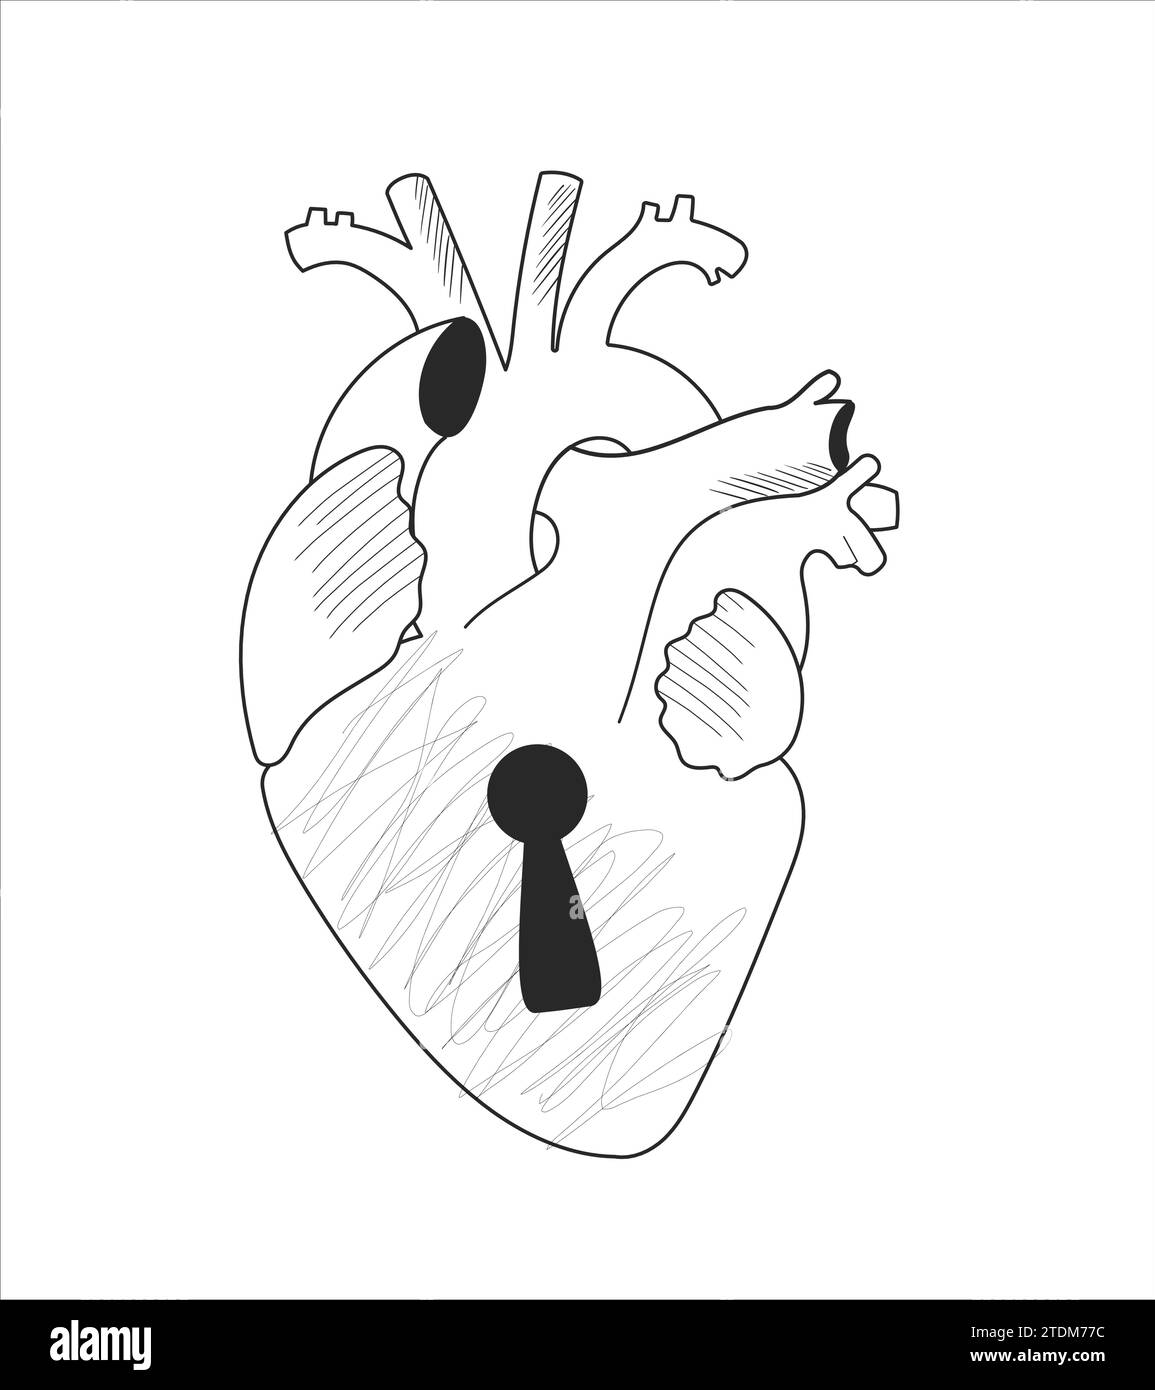 How to Draw a Human Heart - DrawingNow-saigonsouth.com.vn